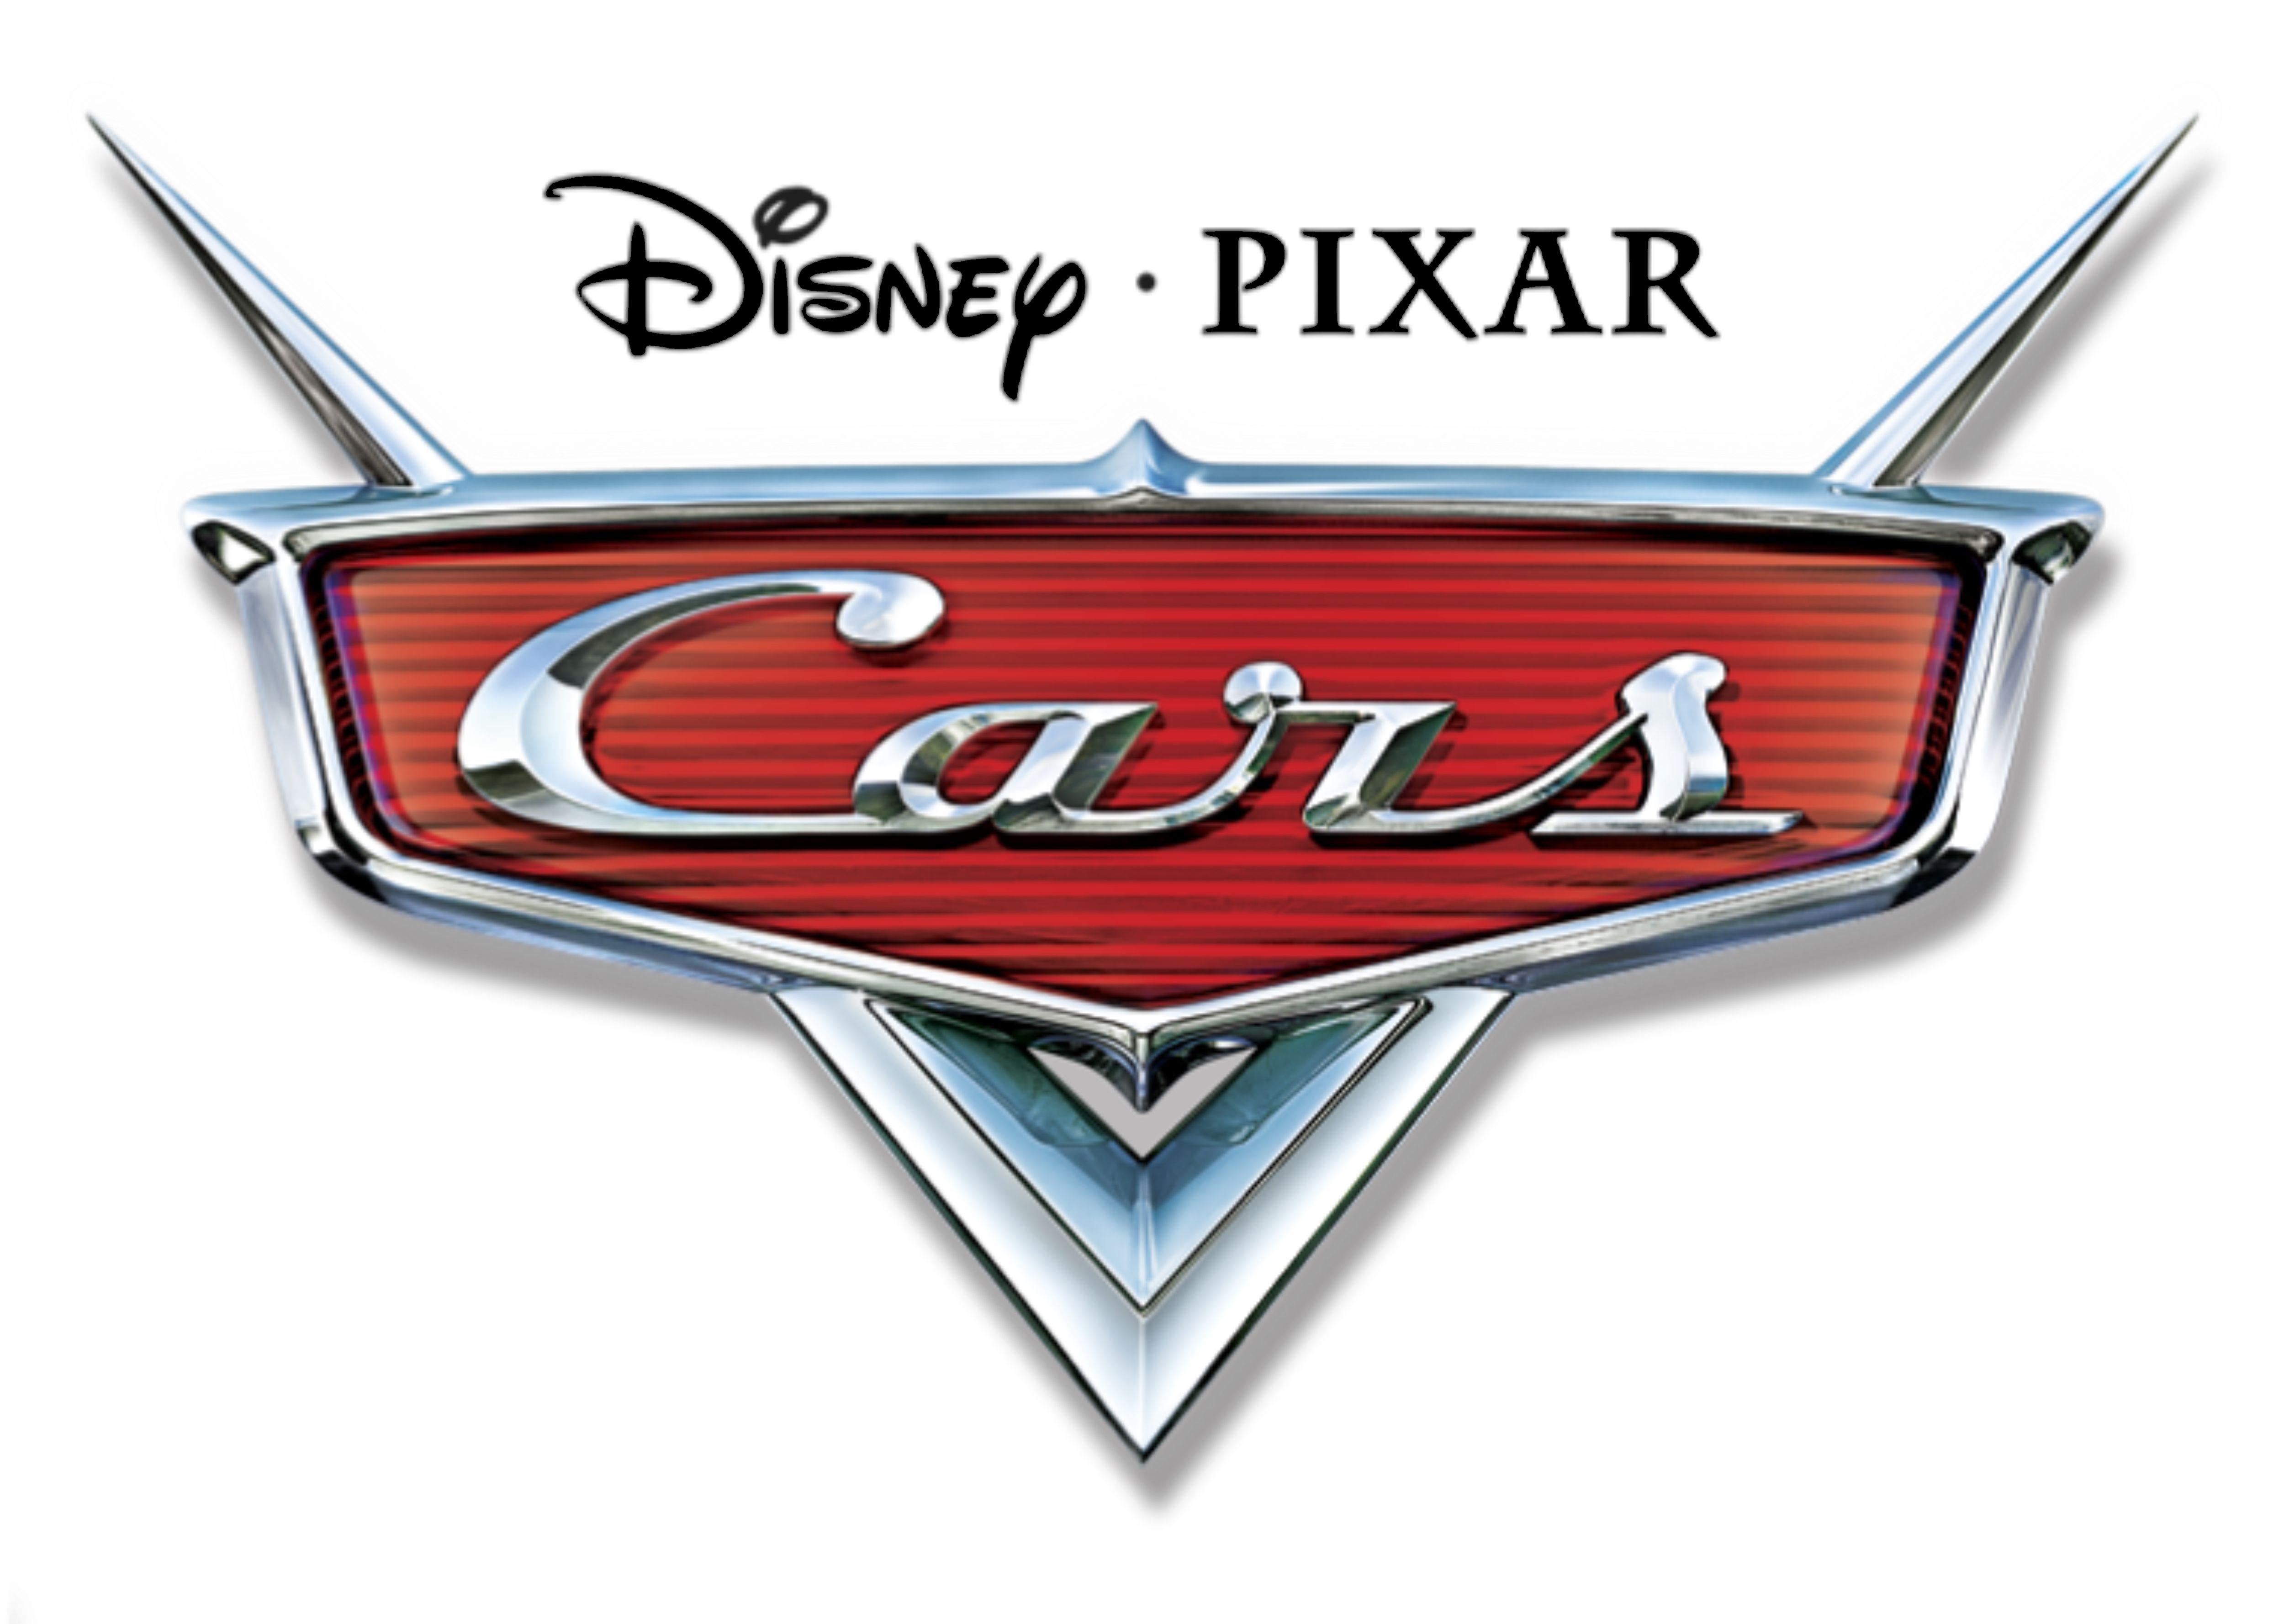 Disney Pixar Logo - Cars (Disney Pixar)